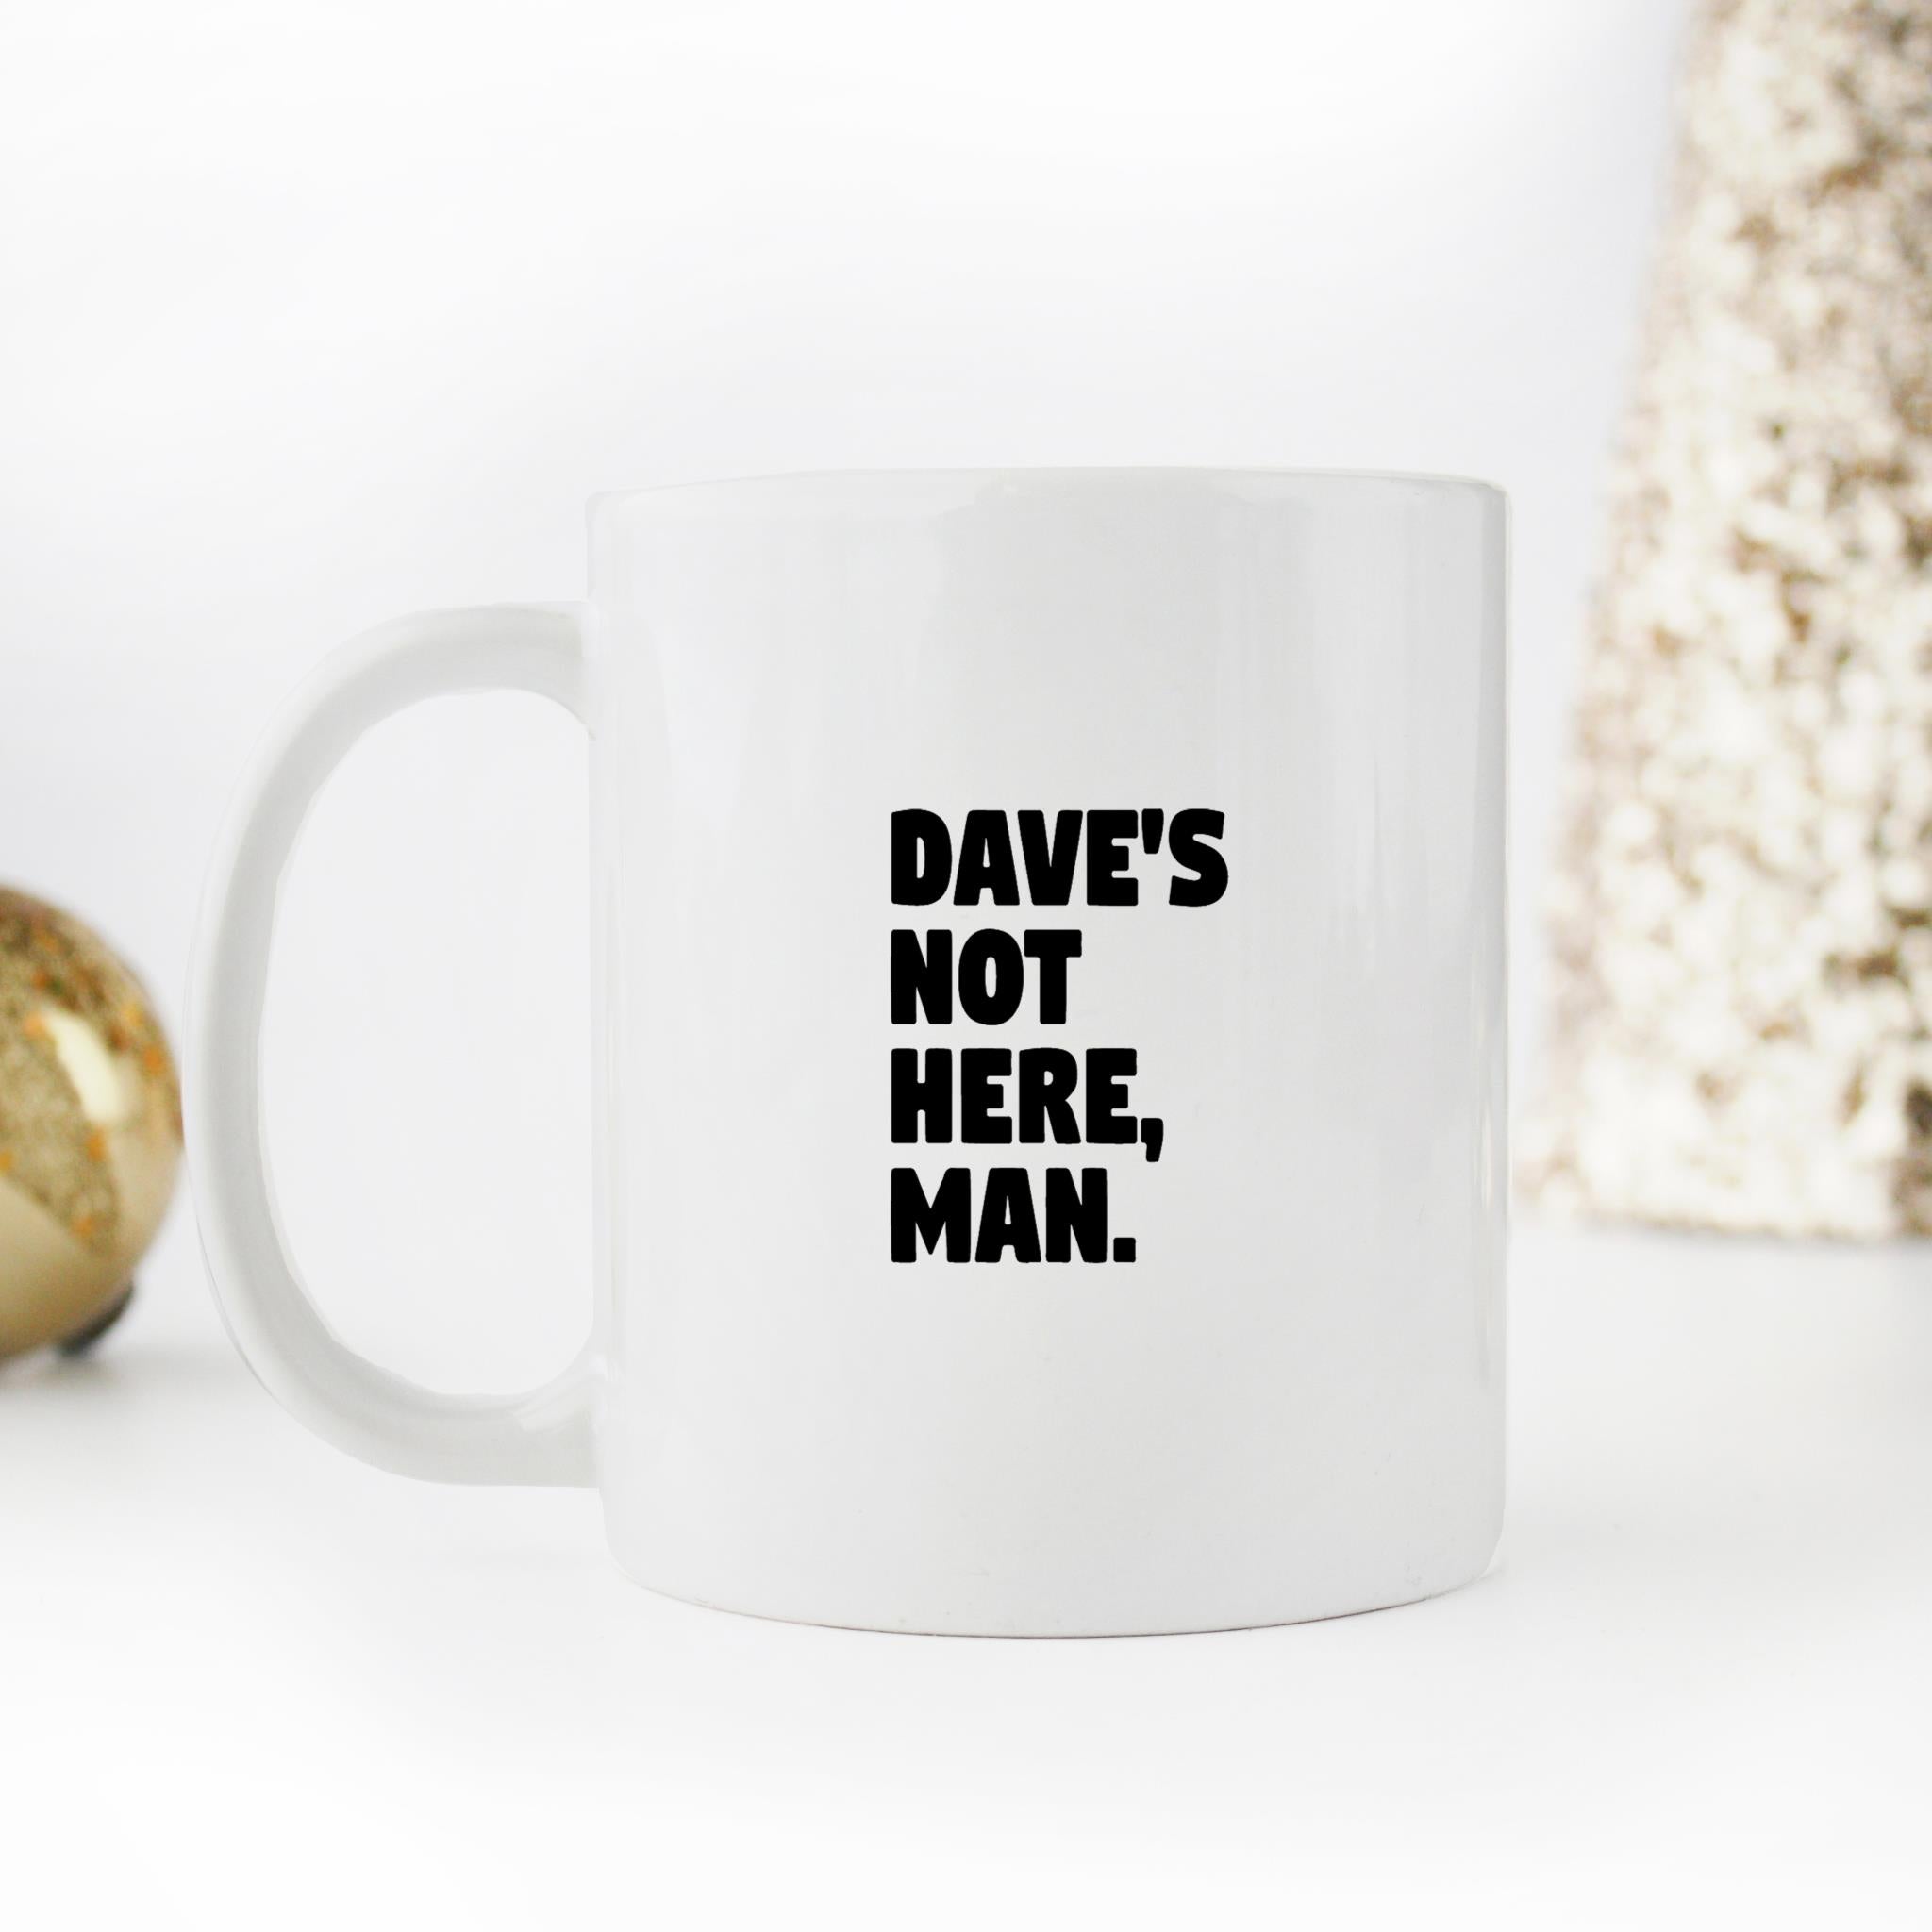 Skitongifts Funny Ceramic Novelty Coffee Mug Dave's Not Here, Man s7BYmCu